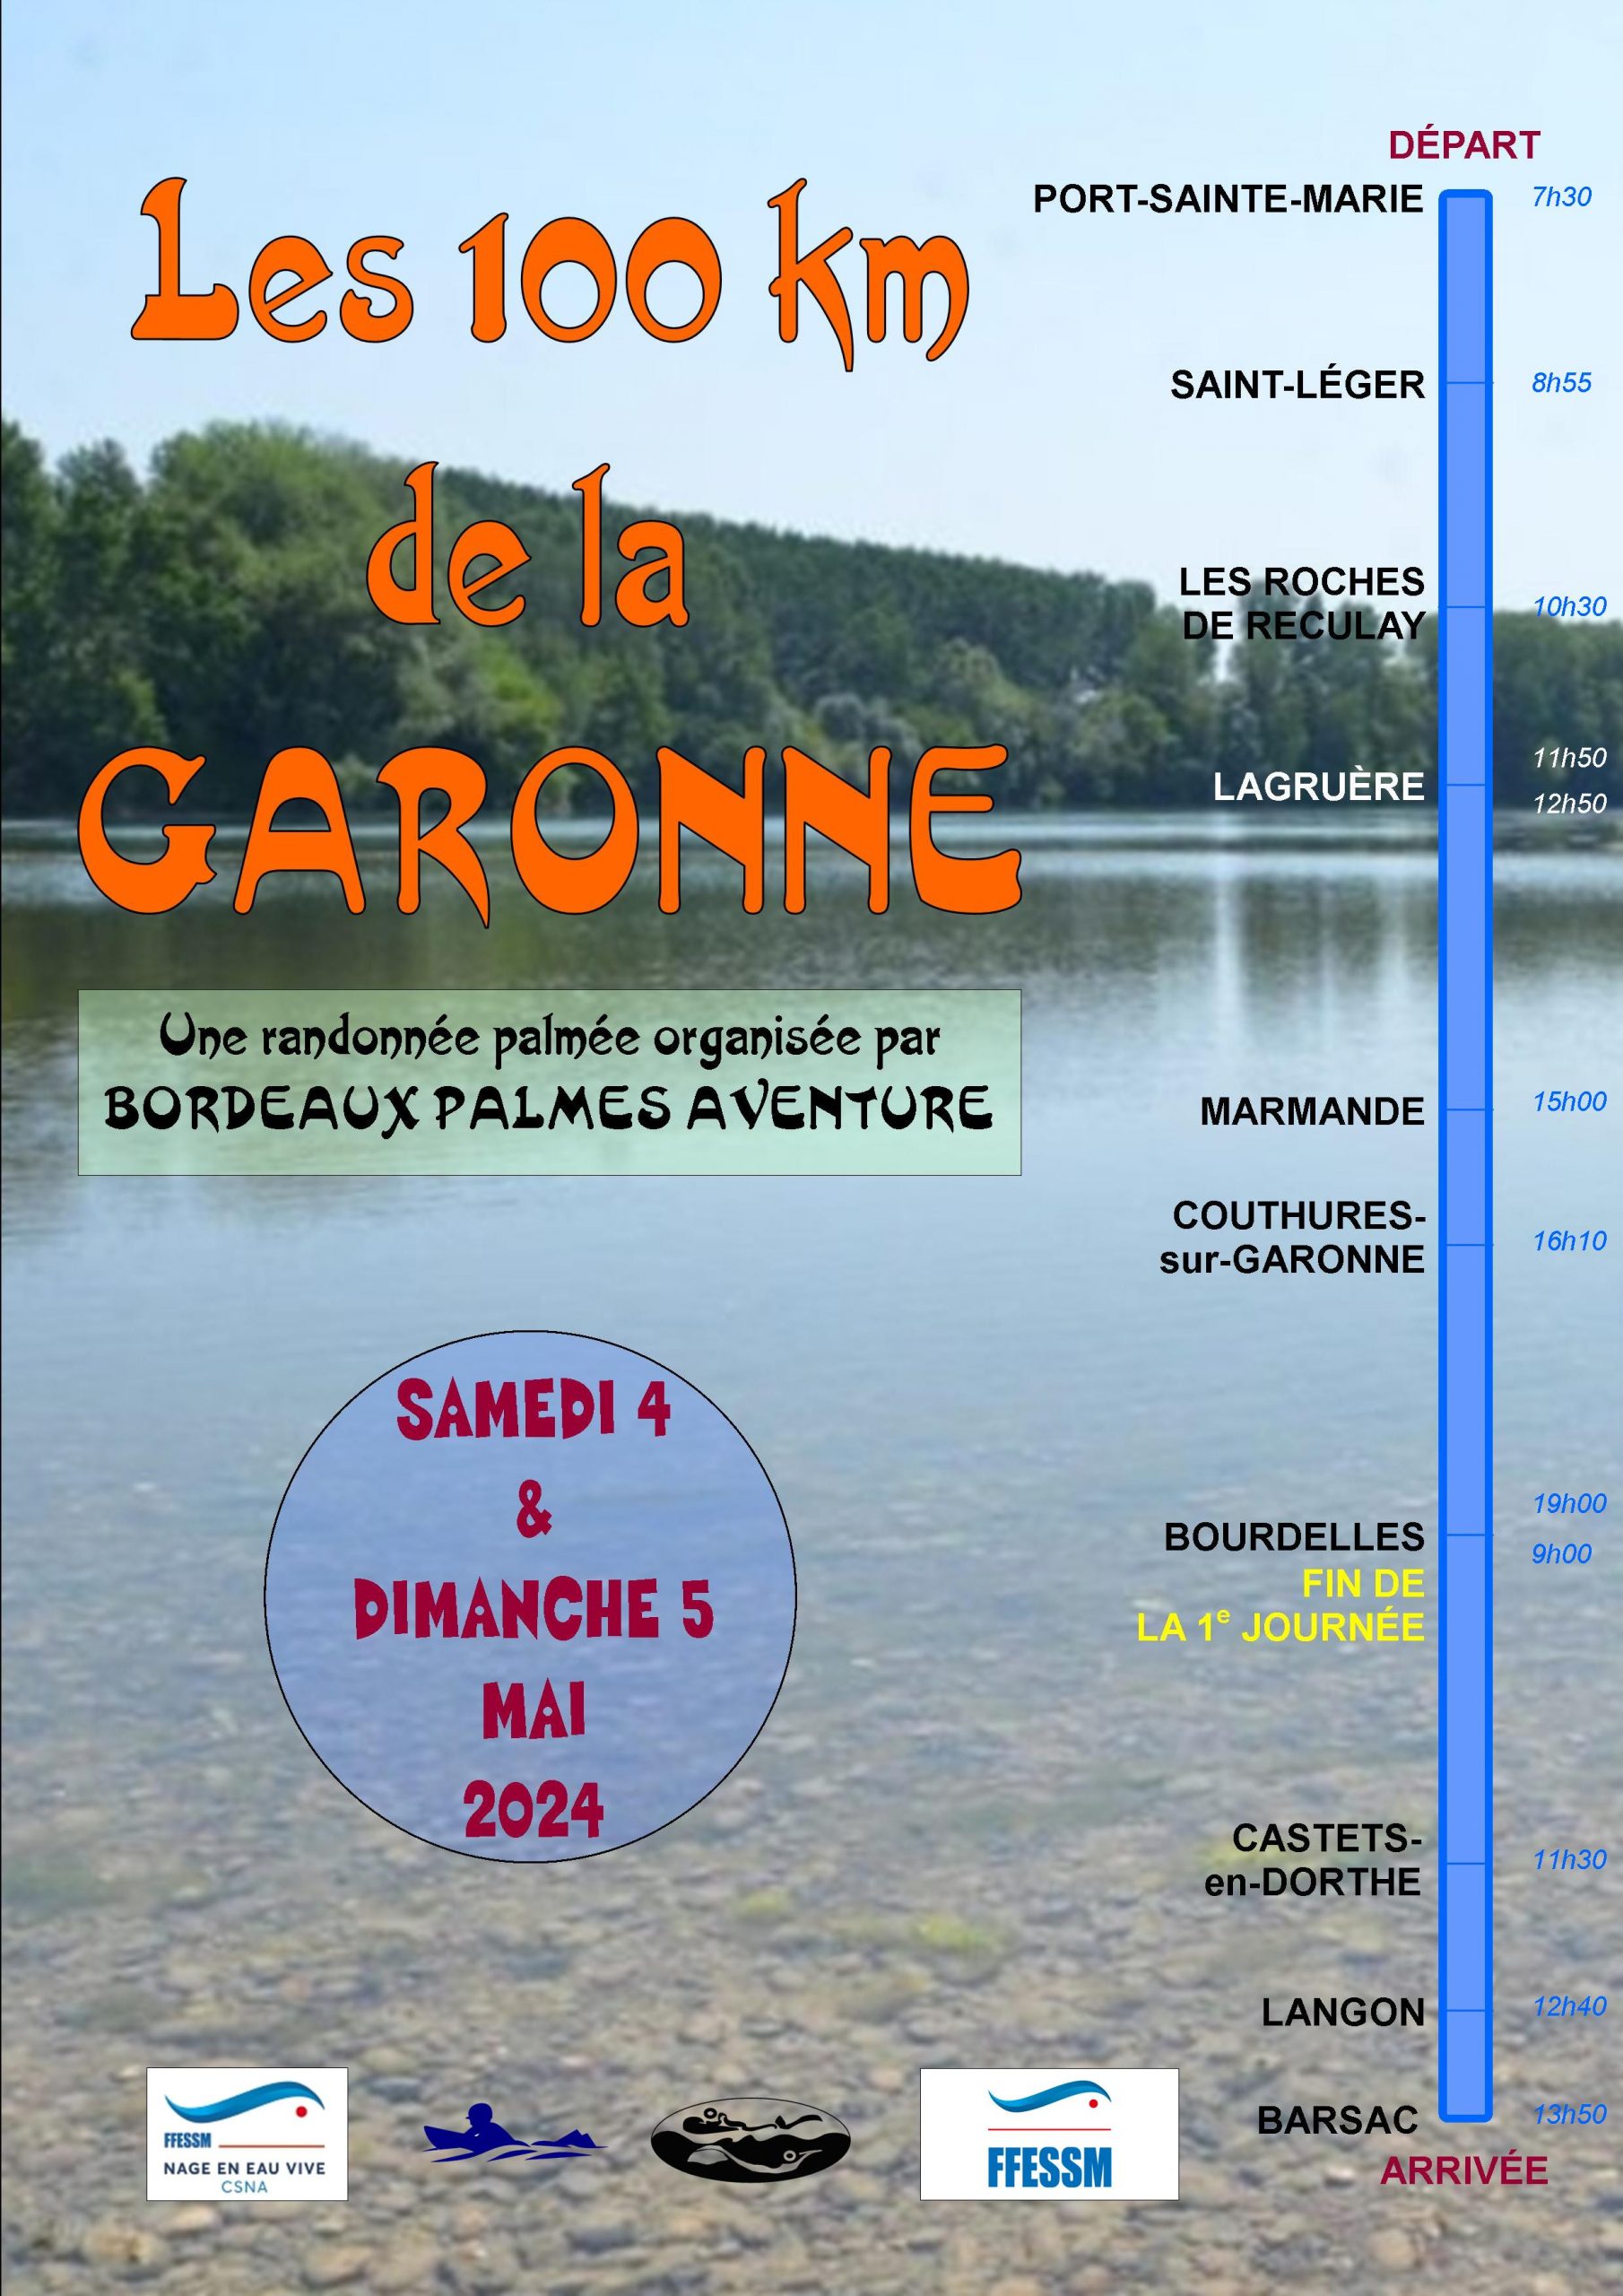 Les 100 km de la Garonne.. à la nage !